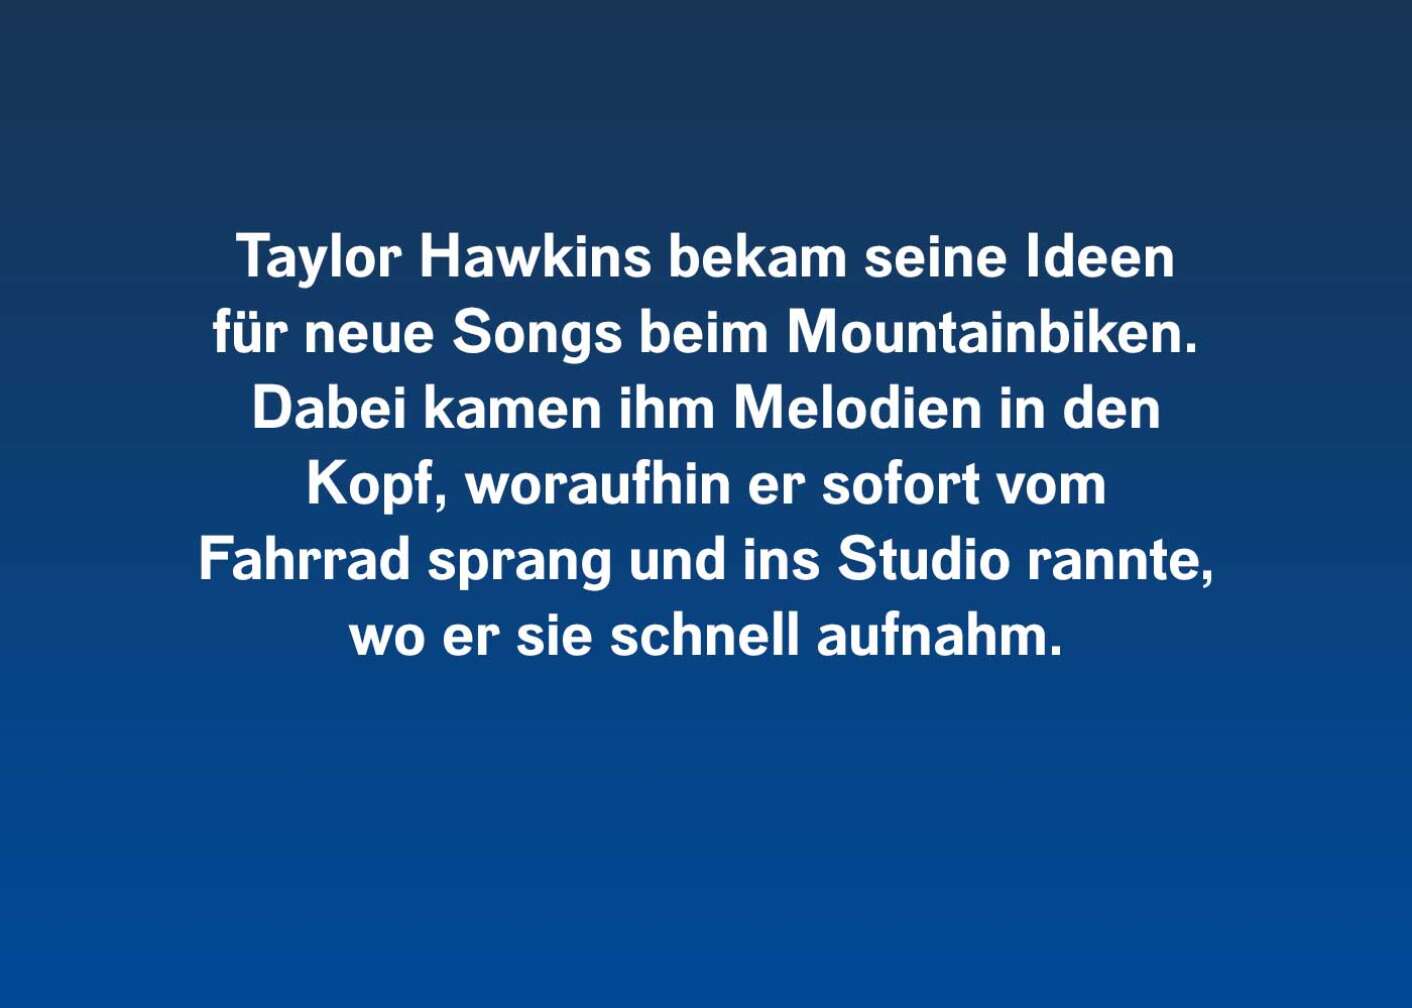 Fünf Fakten über Taylor Hawkins